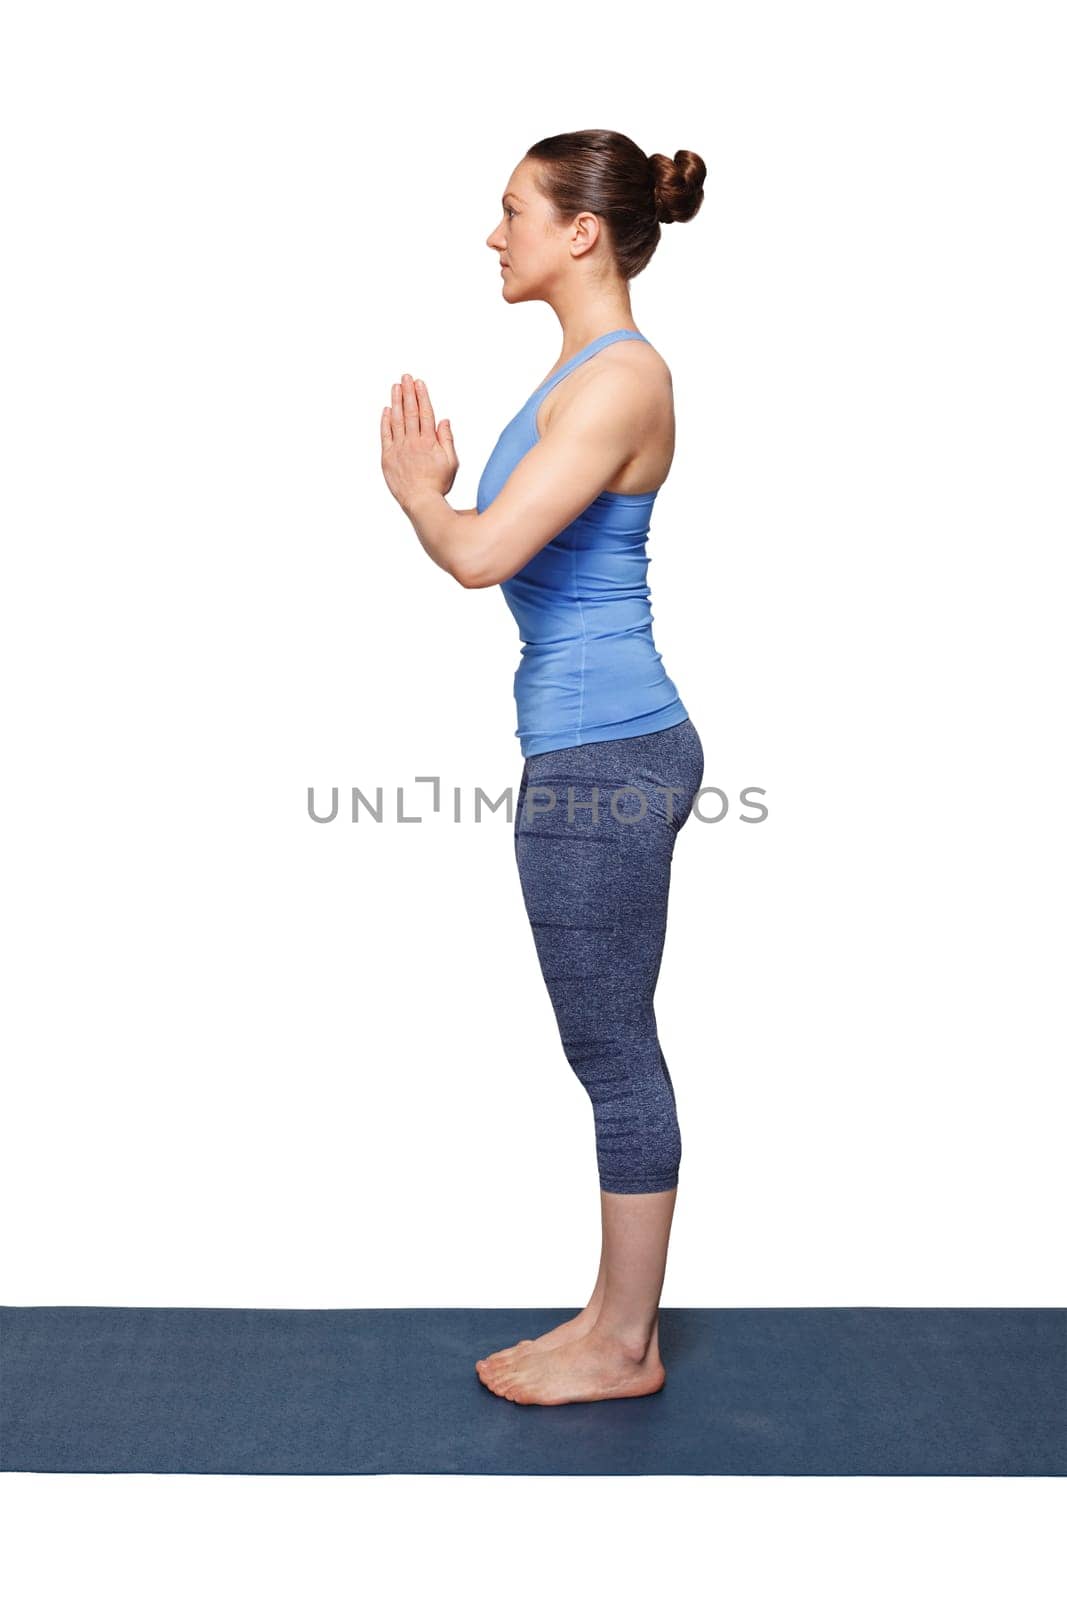 Woman doing Hatha Yoga asana Tadasana namaste -Mountain pose with salutation isolated